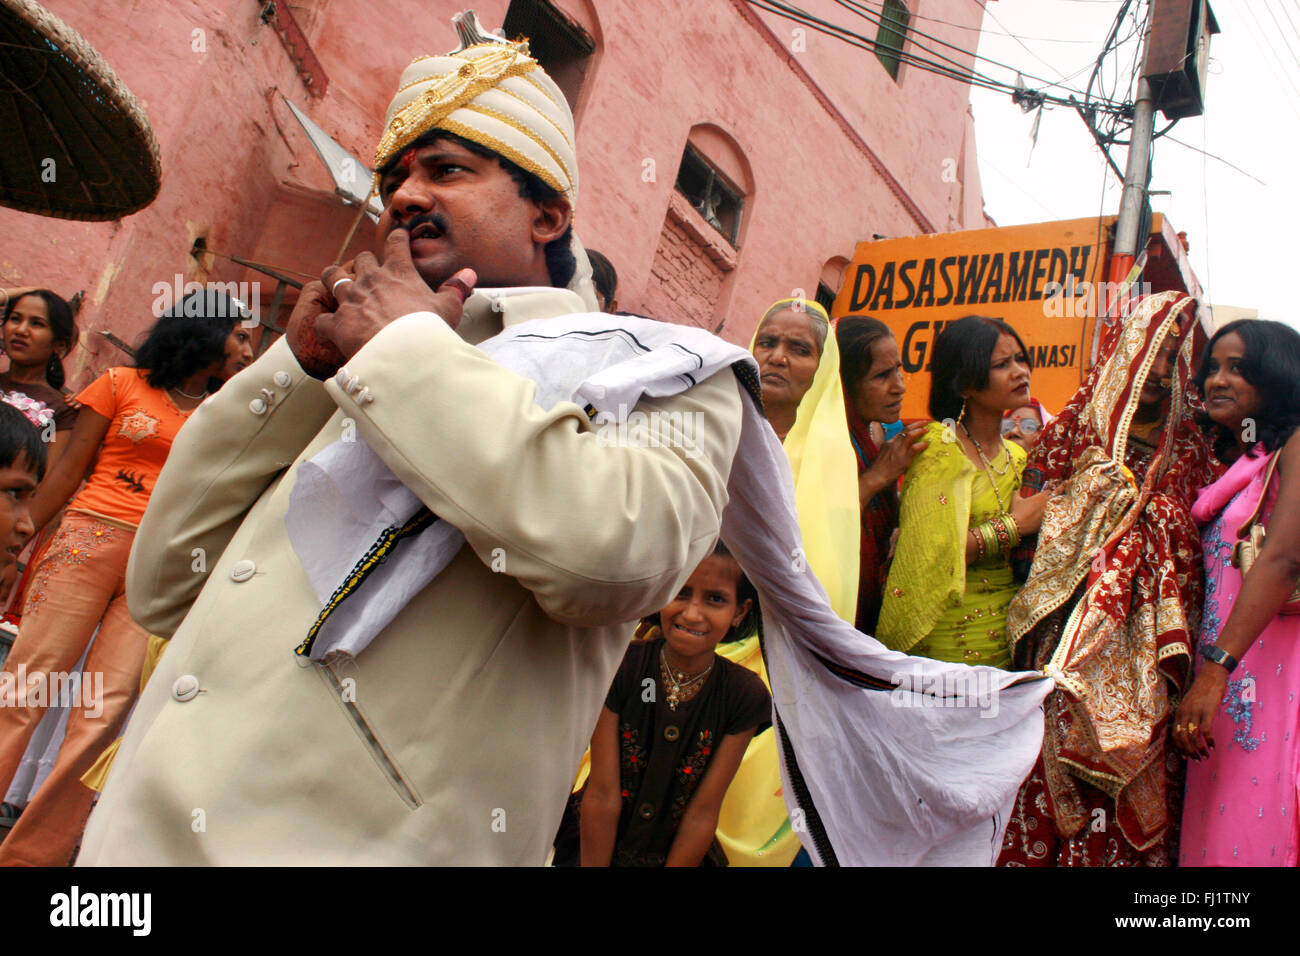 Cérémonie de mariage hindou sur Dashashwamedh Ghat Varanasi, Inde - Banque D'Images